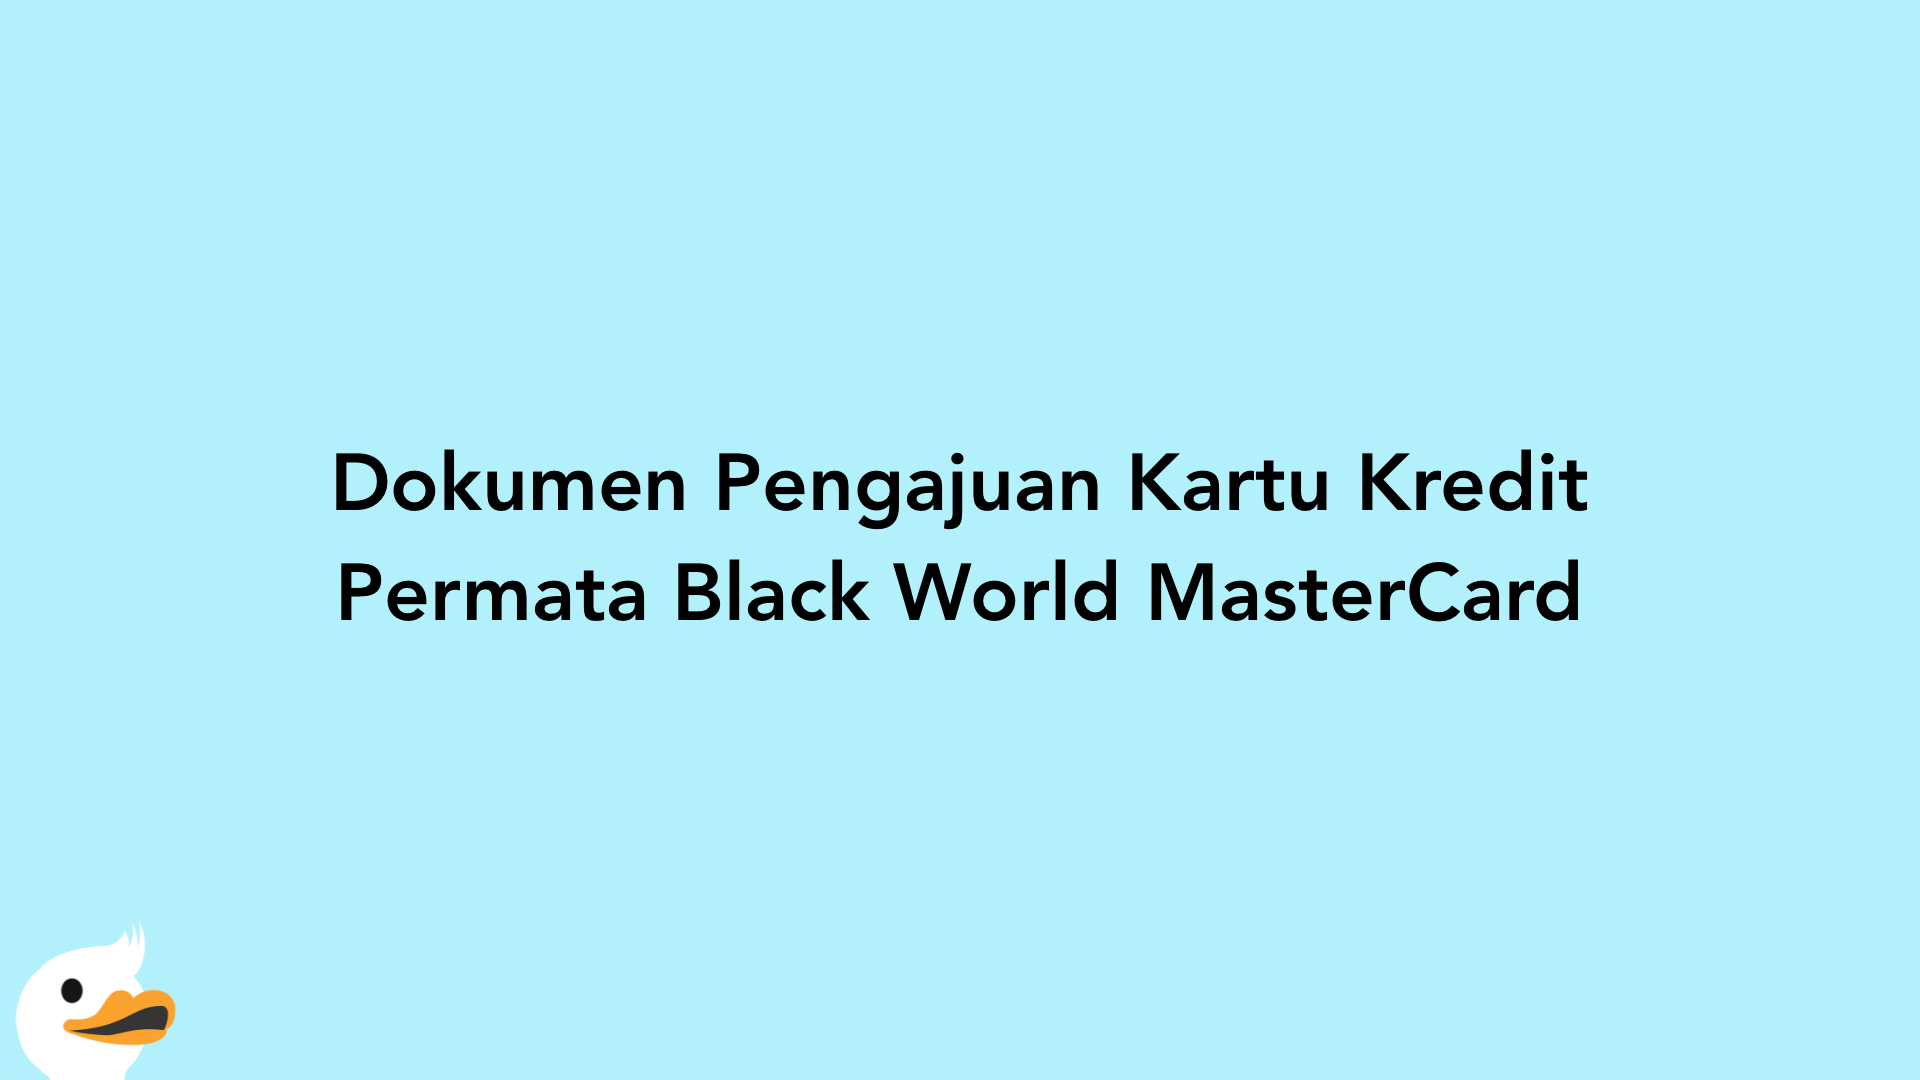 Dokumen Pengajuan Kartu Kredit Permata Black World MasterCard